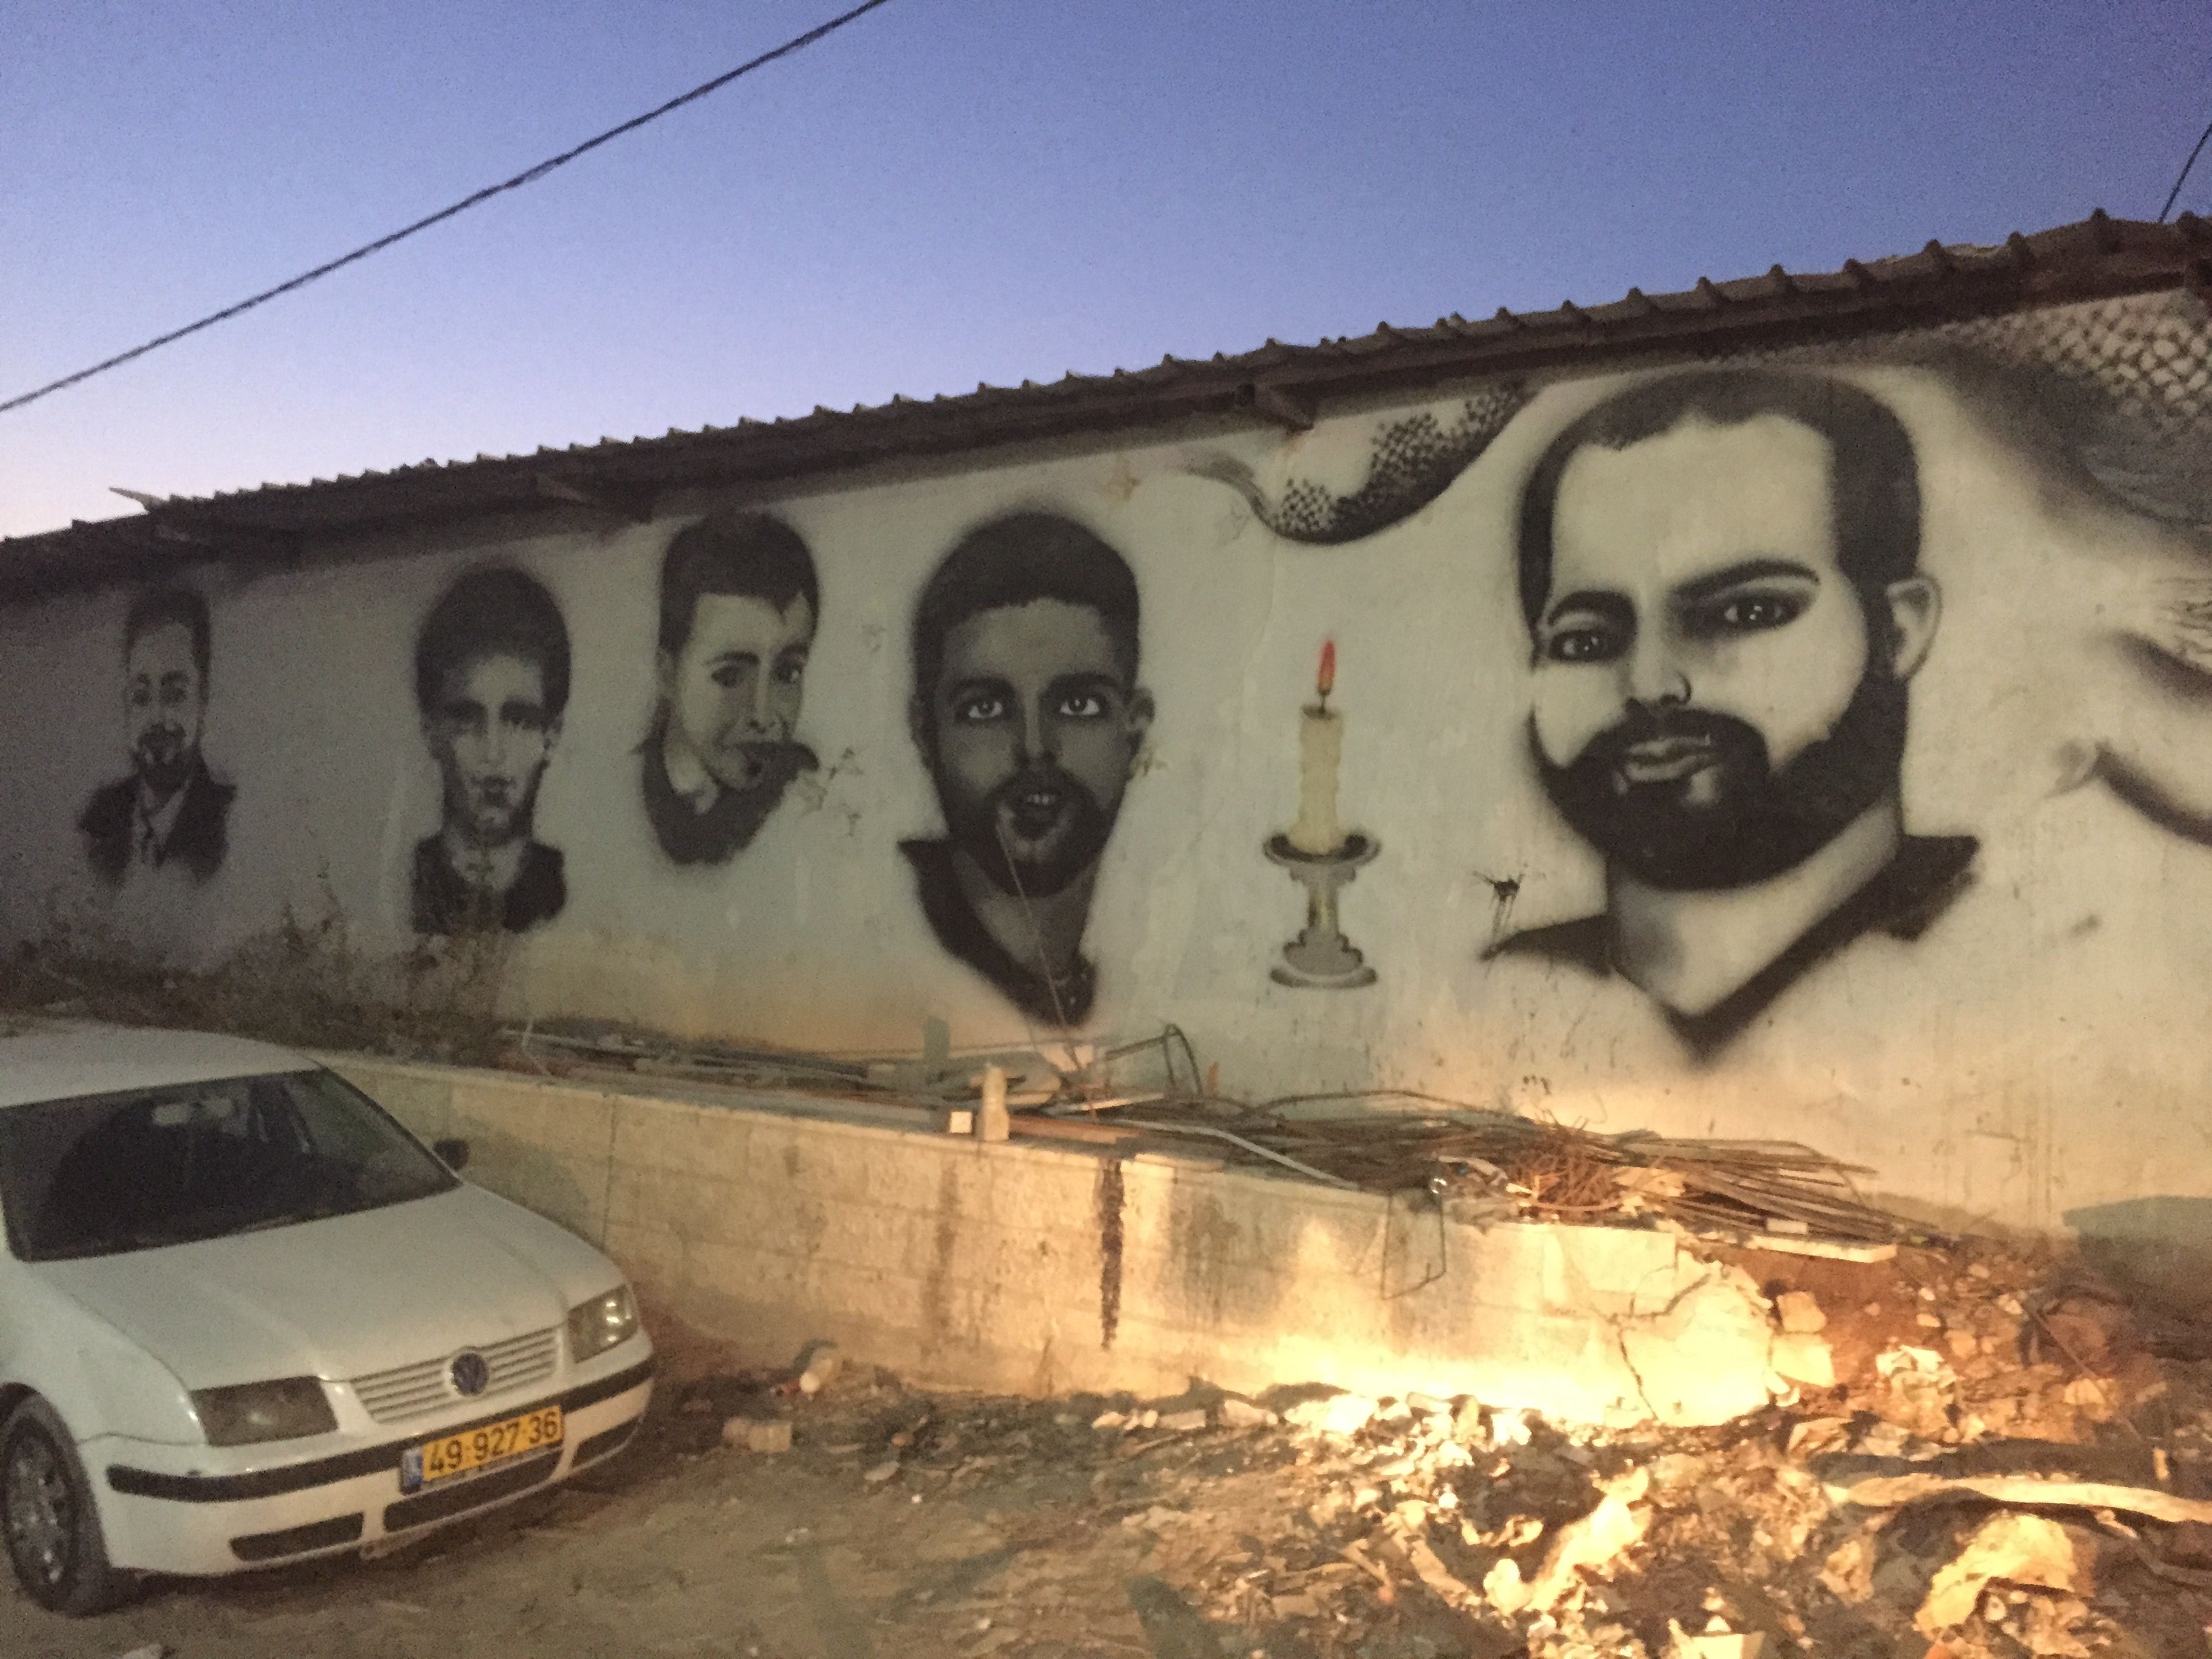 Murals of Palestinians killed by Israel decorate the walls around Qalandia village near the checkpoint. Image by Matt Kennard. Palestine, 2016.